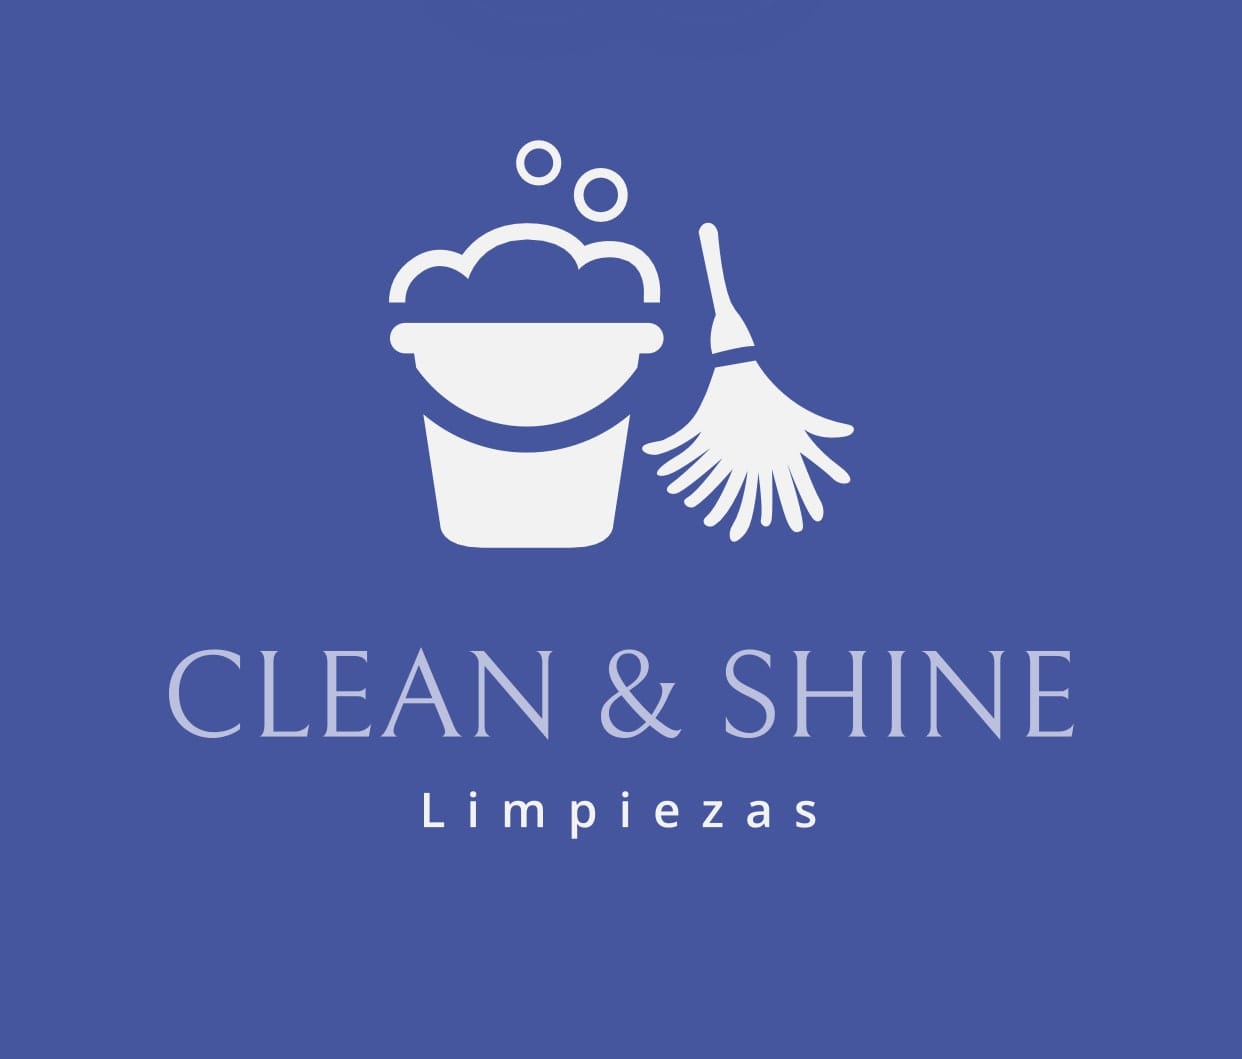 Clean & Shine Limpiezas